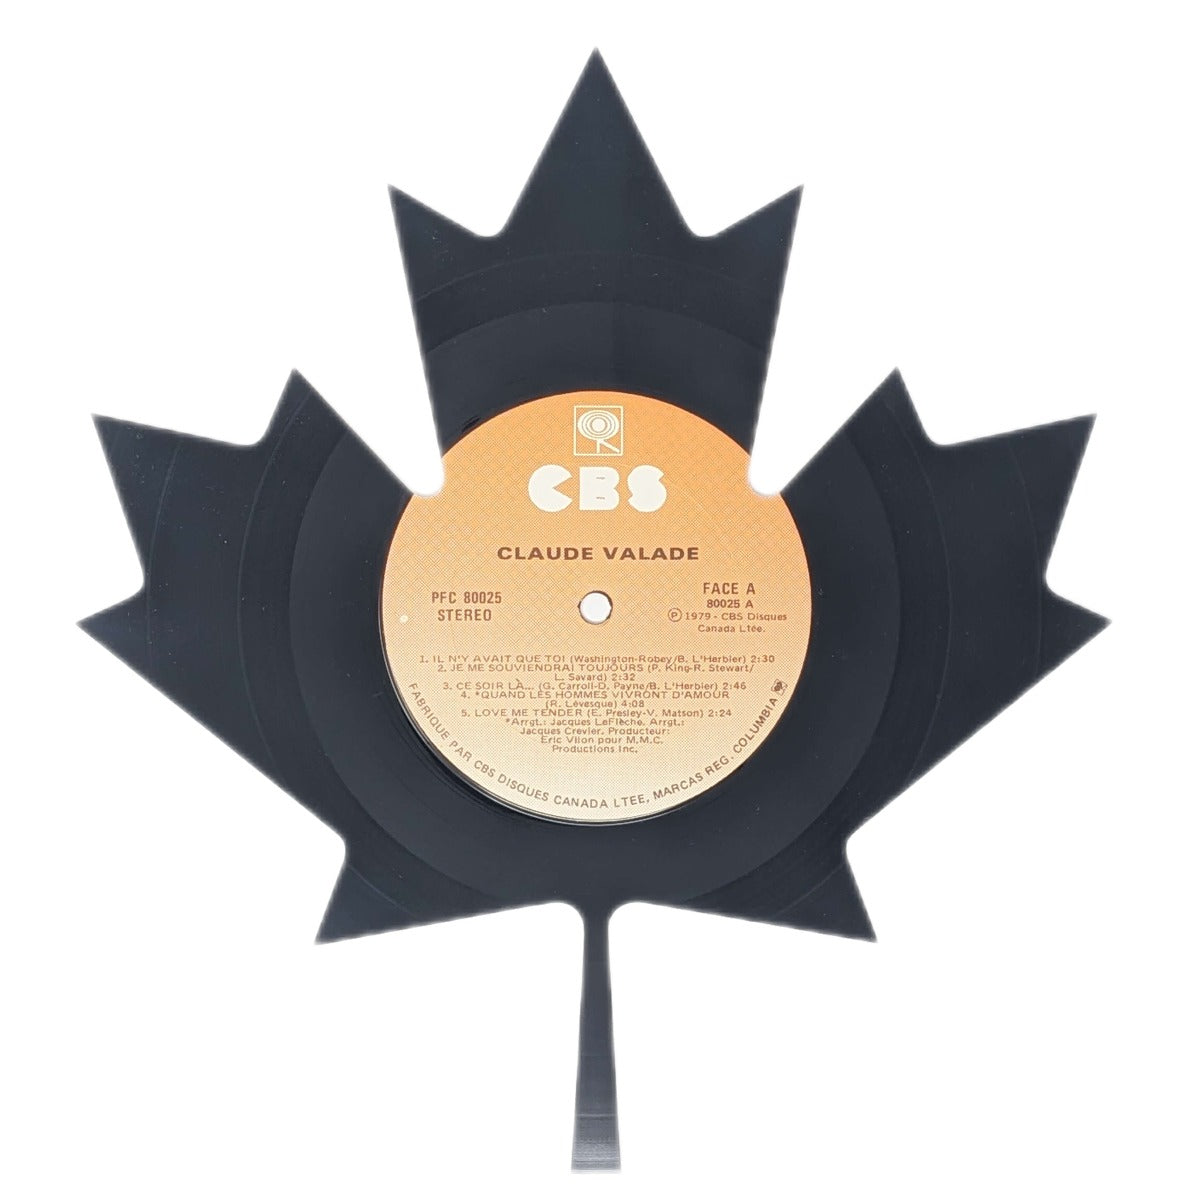 Vinyl record - Maple leaf